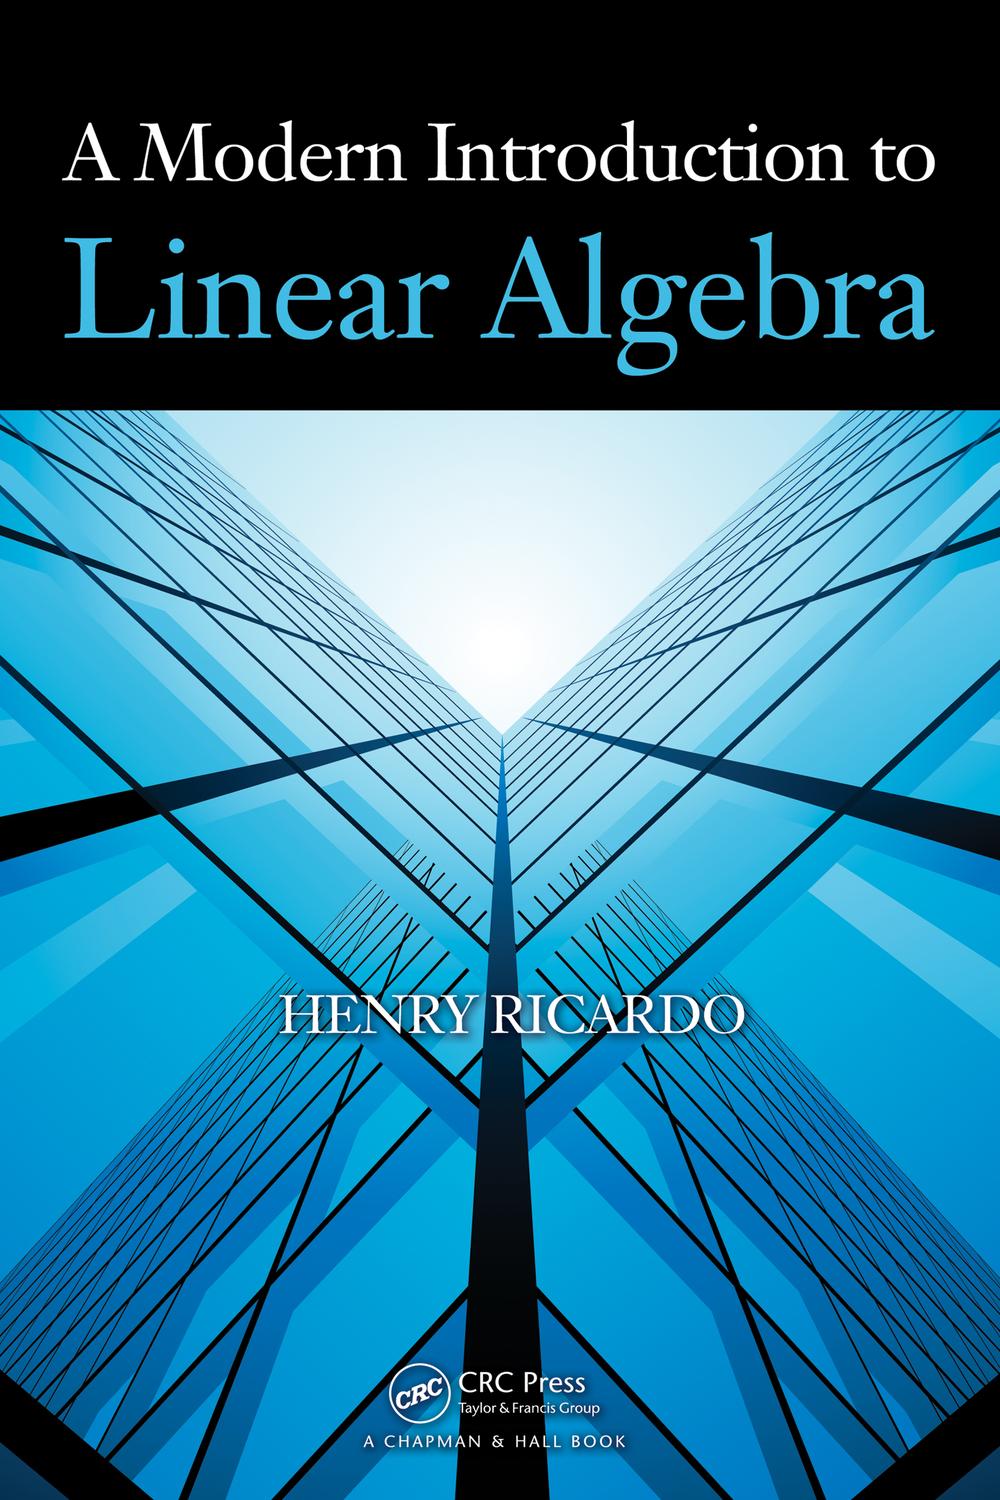 A Modern Introduction to Linear Algebra - Henry Ricardo